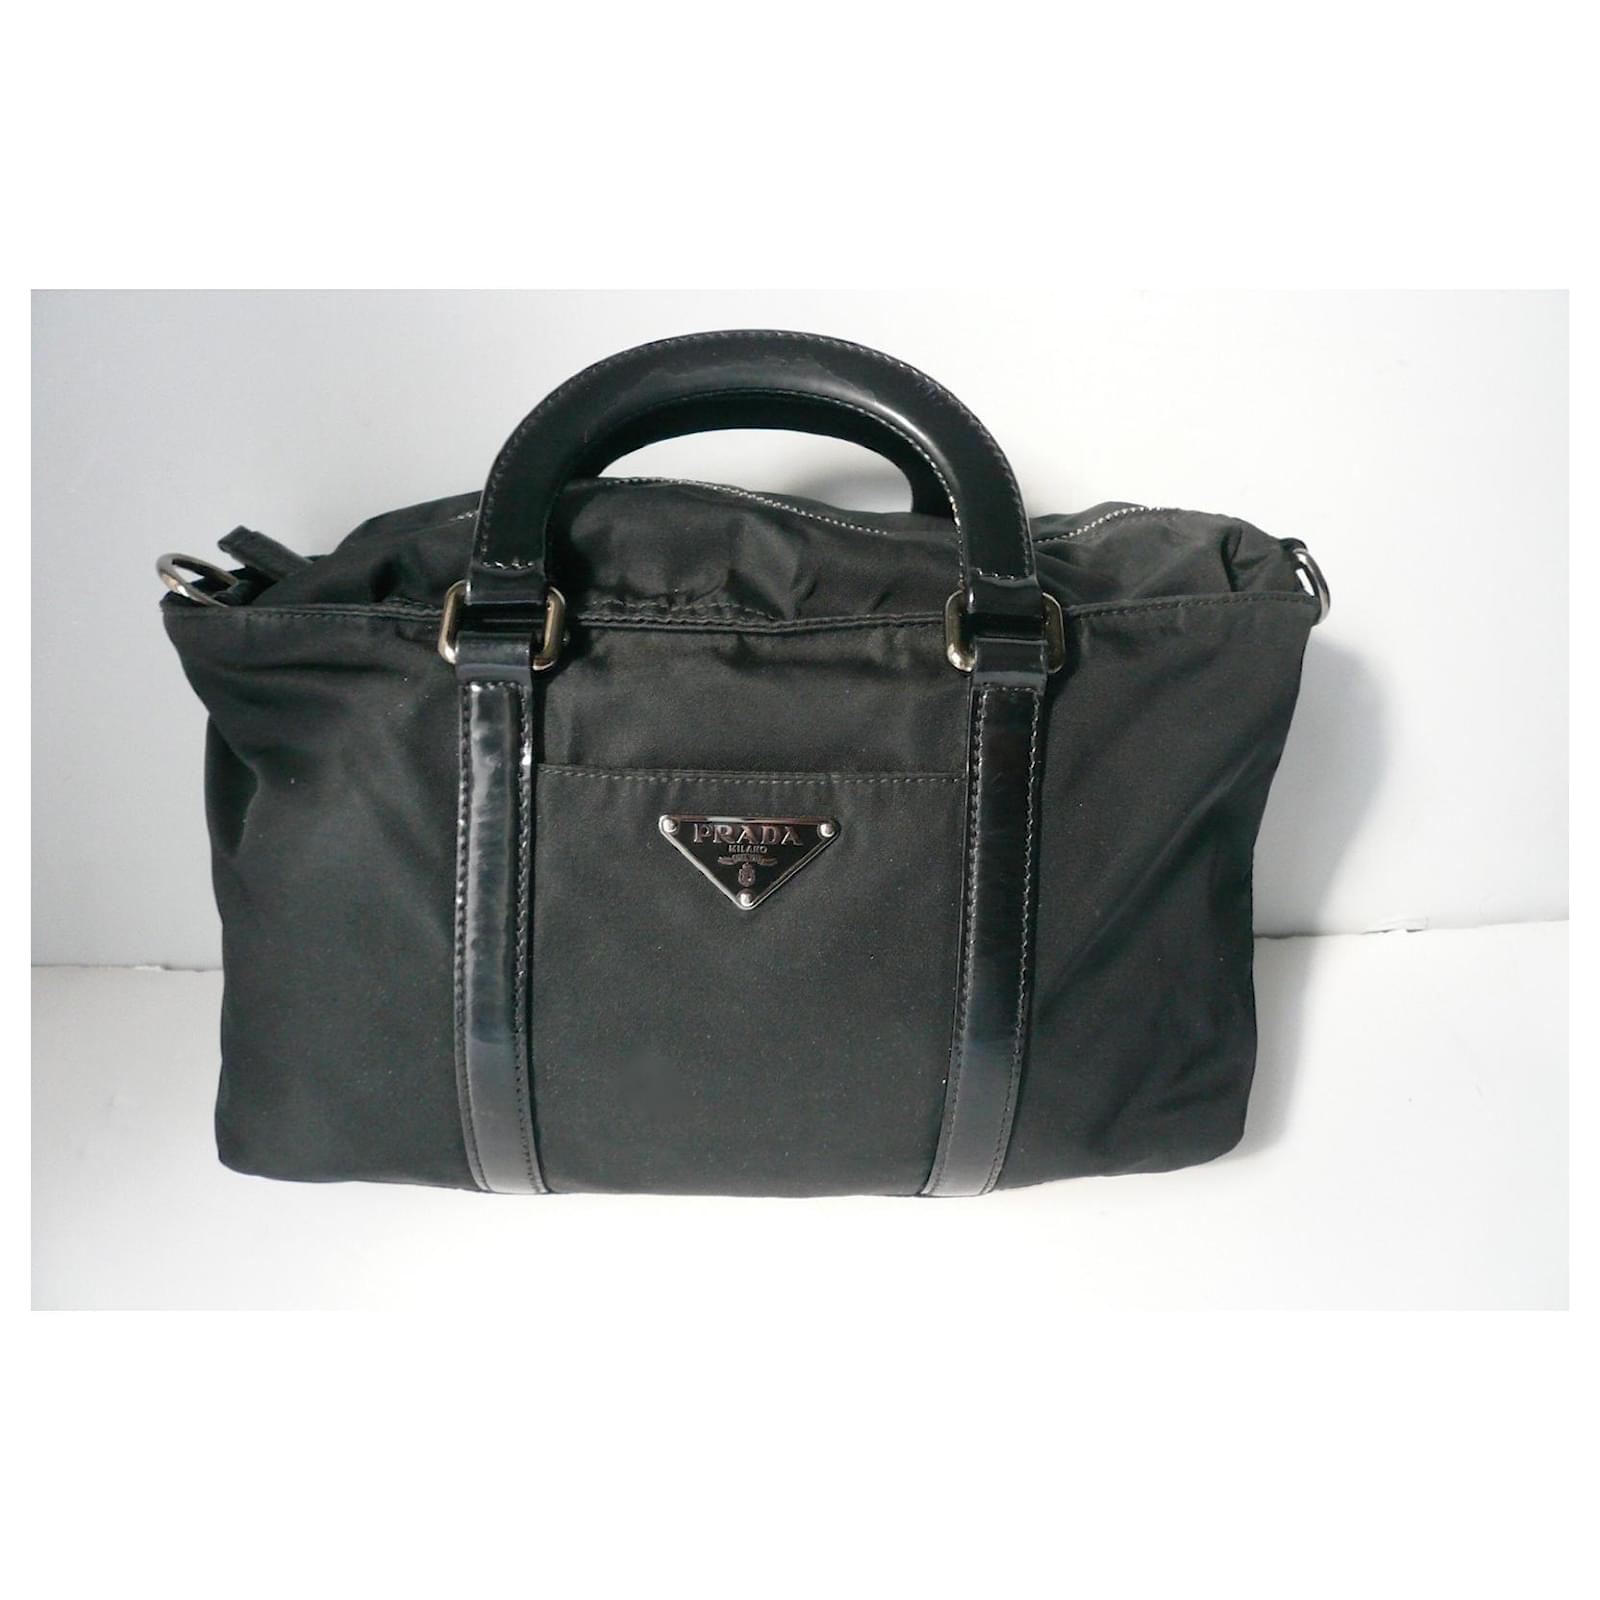 PRADA-Nylon-Leather-2Way-Bag-Hand-Bag-Green-BN1052